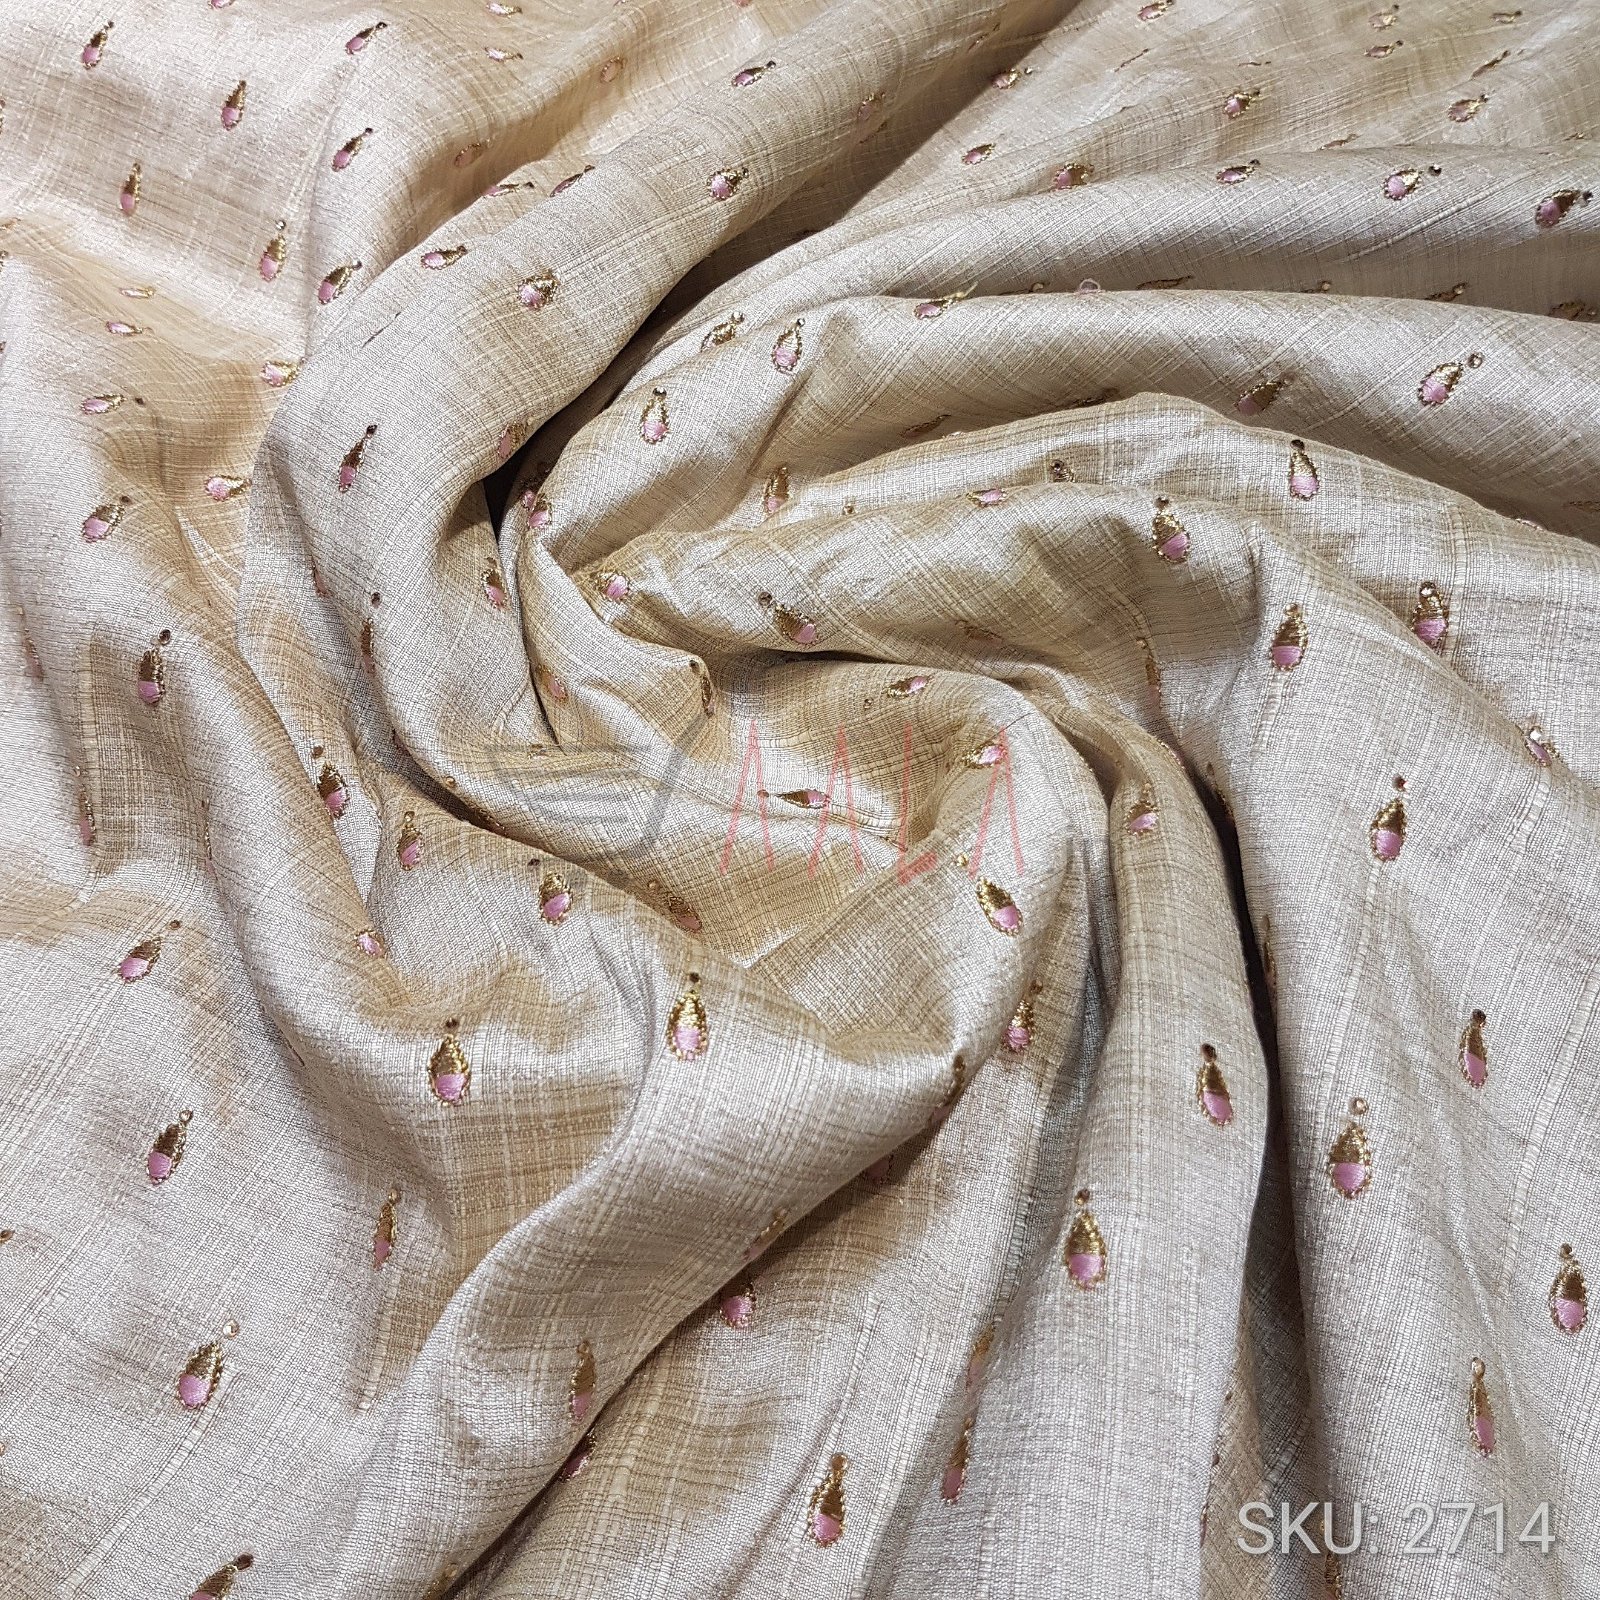 Zari Cotton Silk Poly-ester 44 Inches Dyed Per Metre #2714